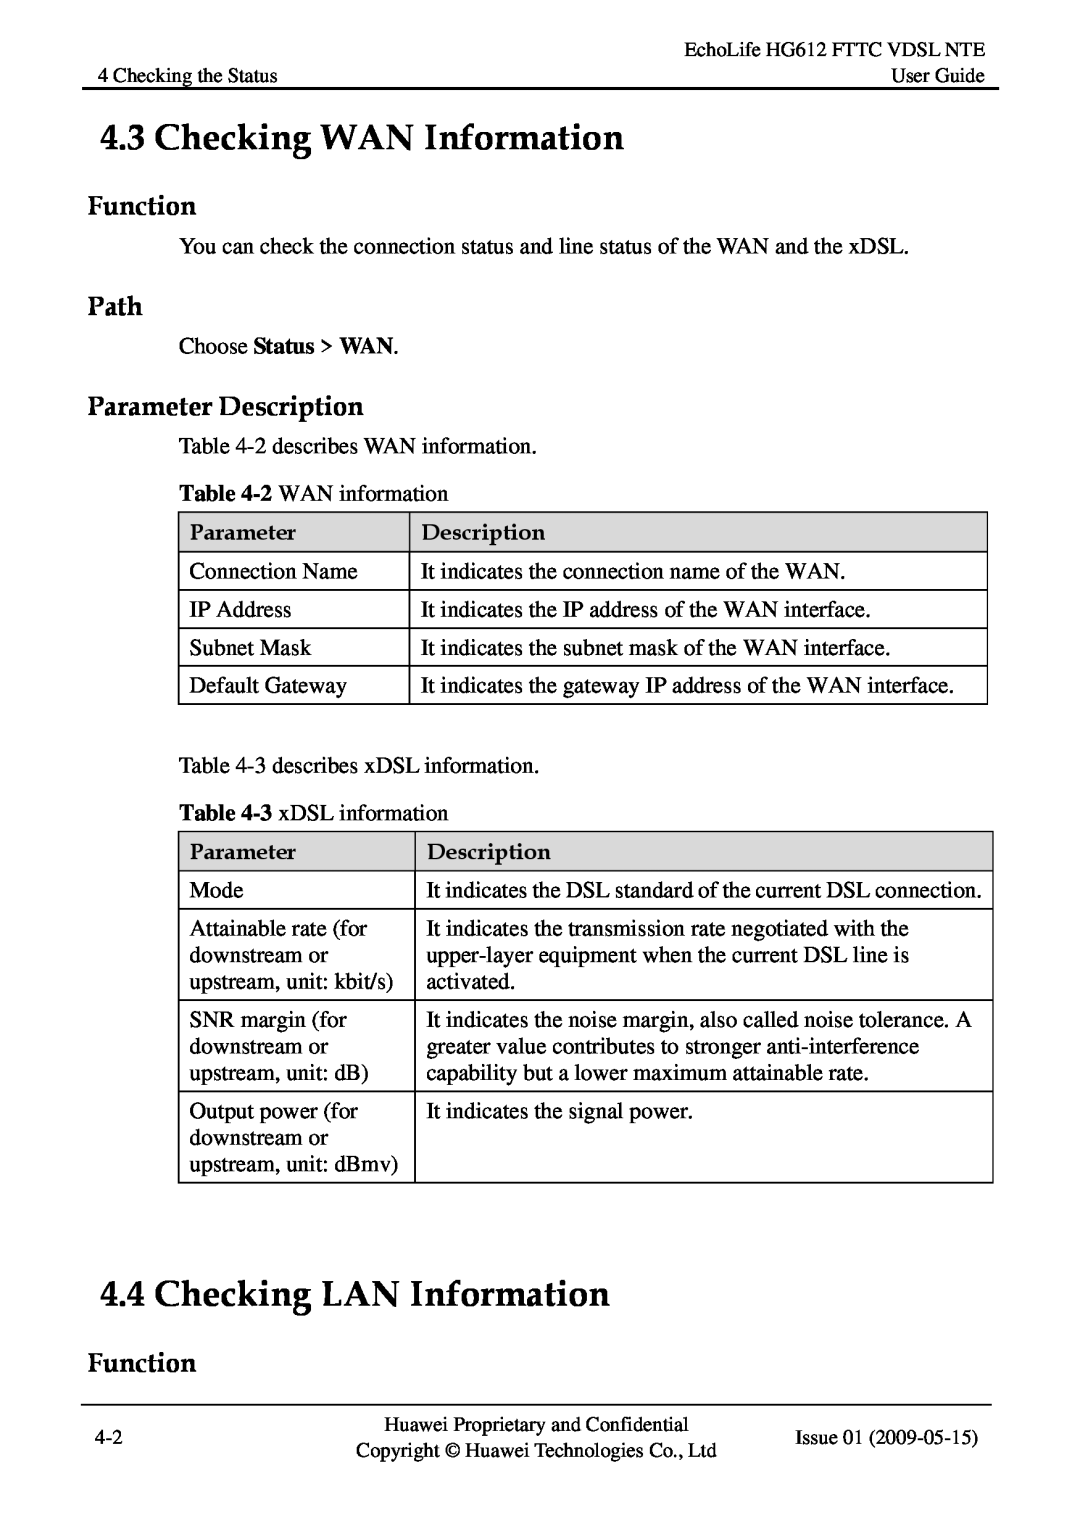 Huawei HG612FTTC VDSL NTE manual Checking WAN Information, Checking LAN Information, Function, Path, Parameter Description 